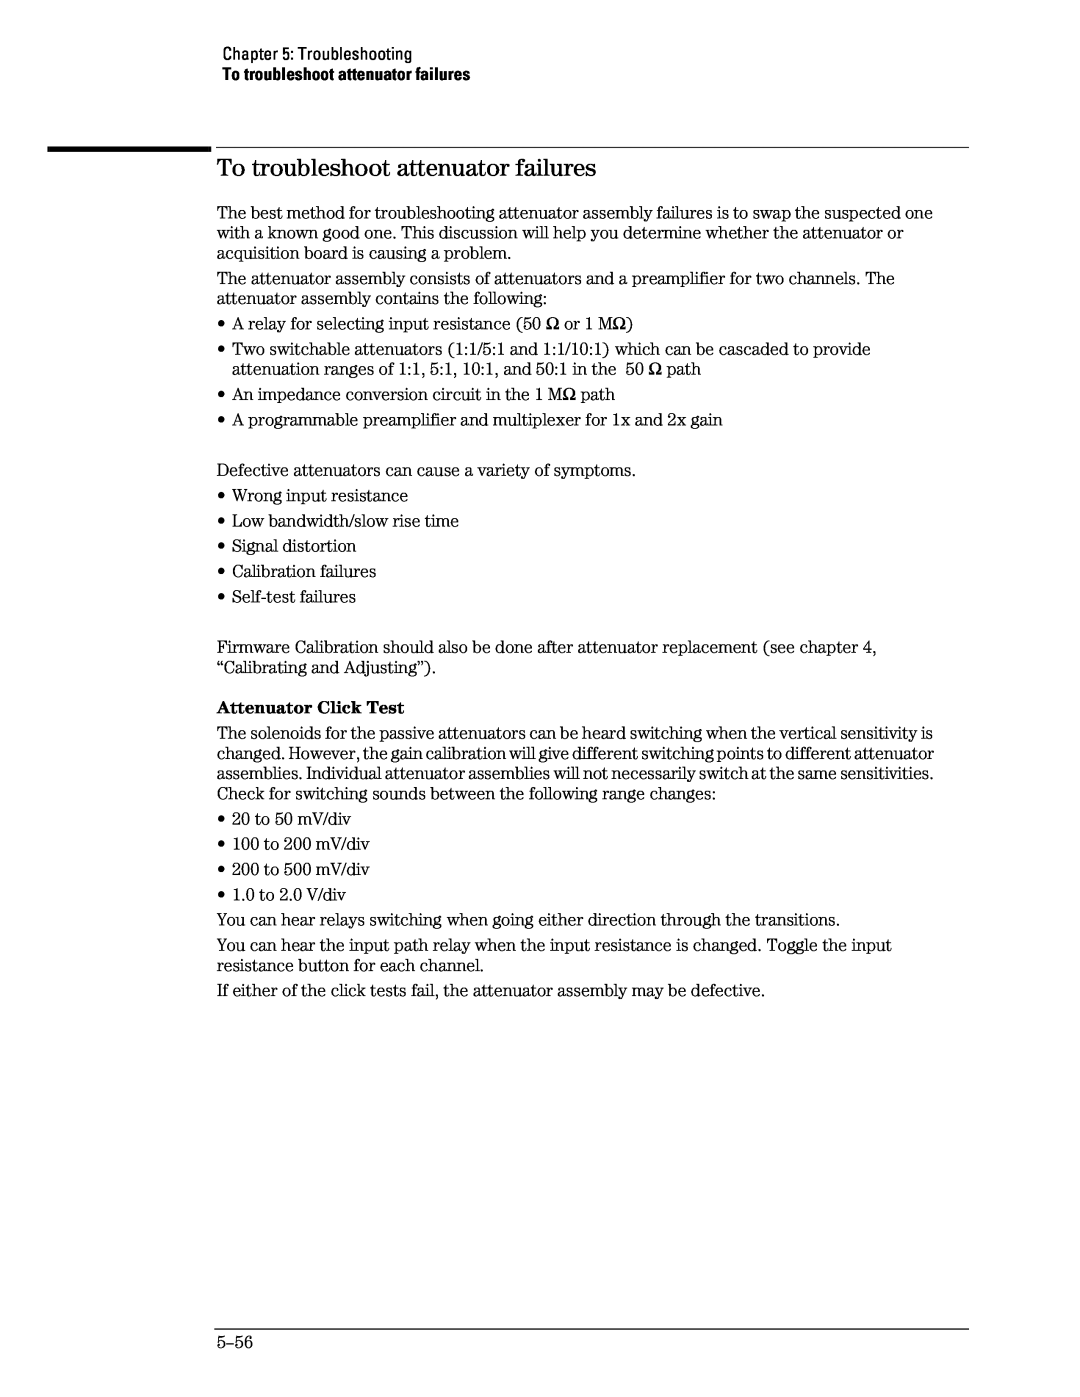 Agilent Technologies 46A, 45A, 54835A manual To troubleshoot attenuator failures 